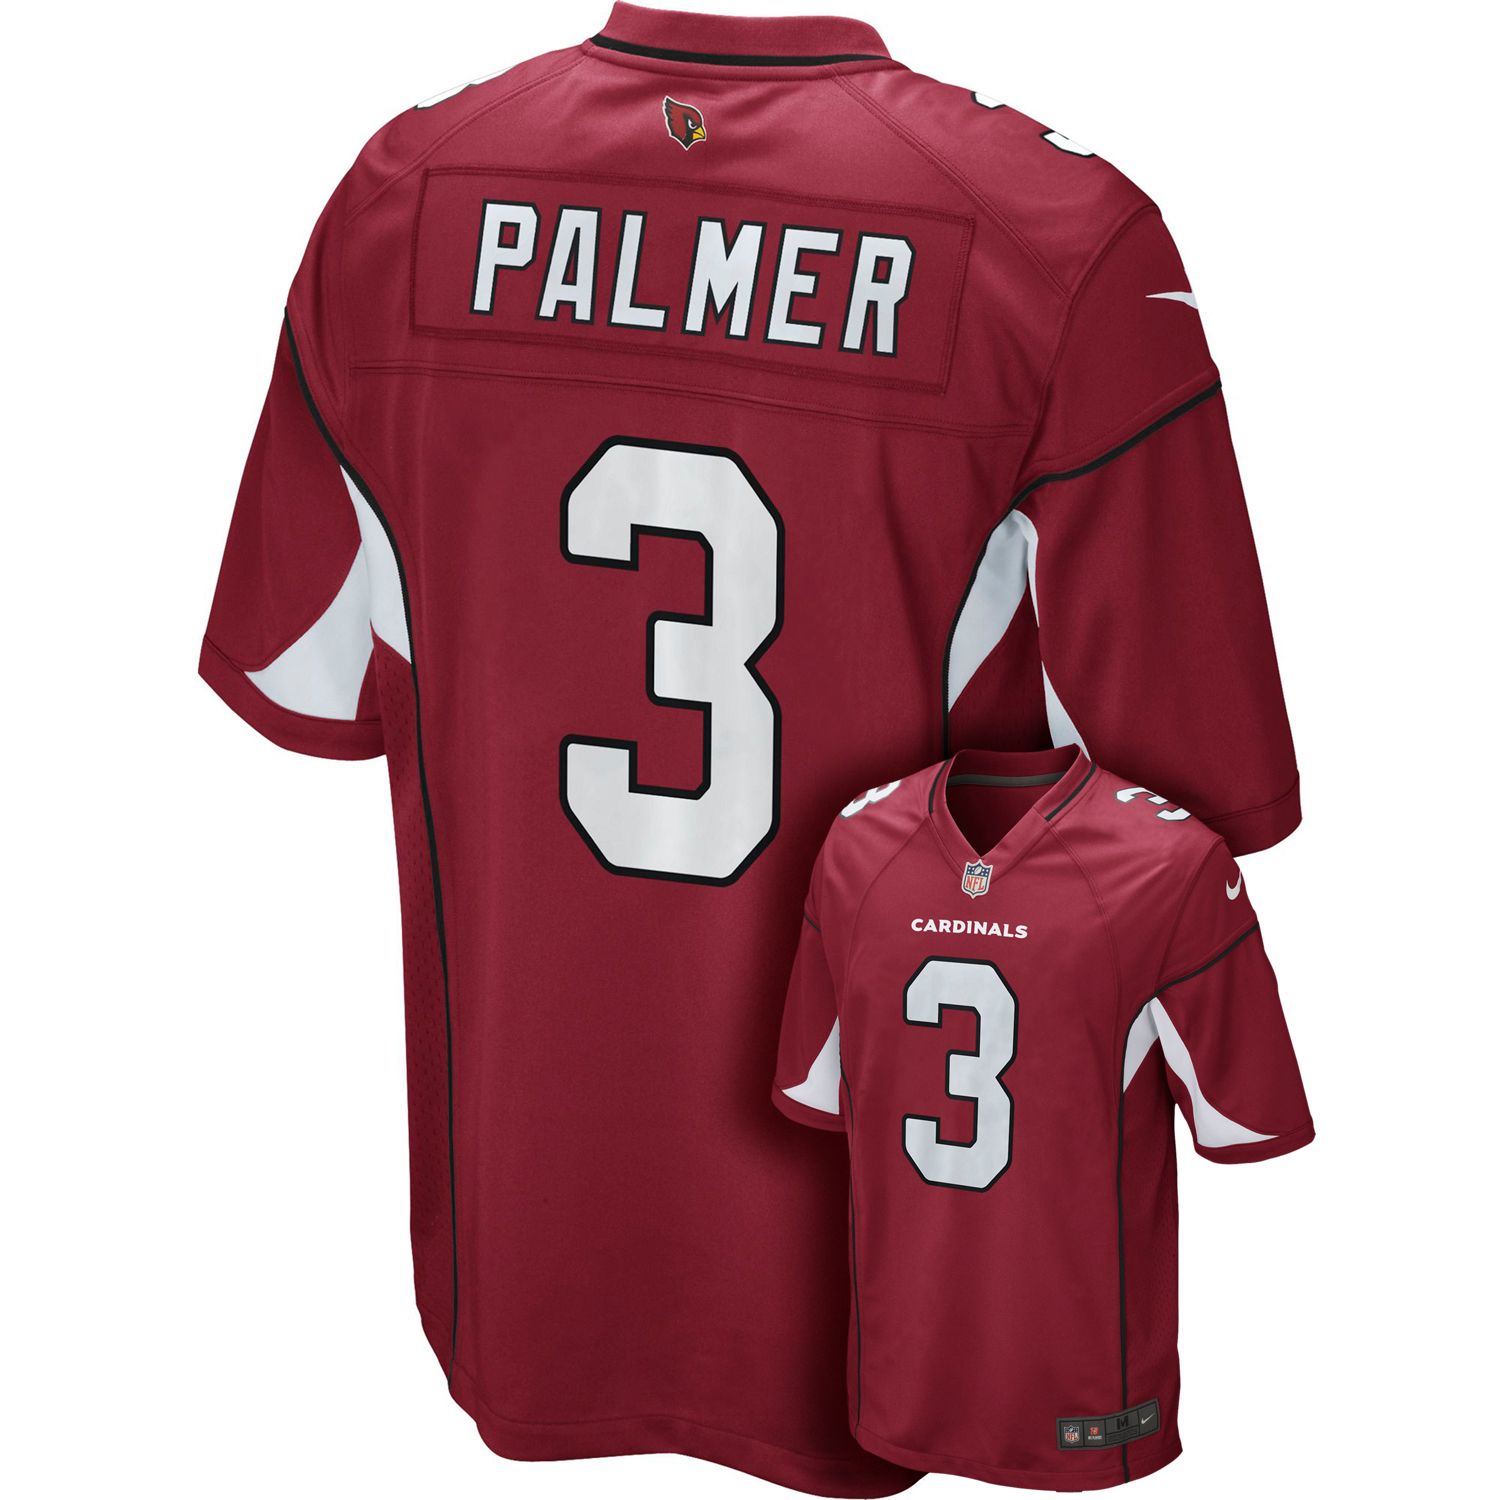 palmer cardinals jersey